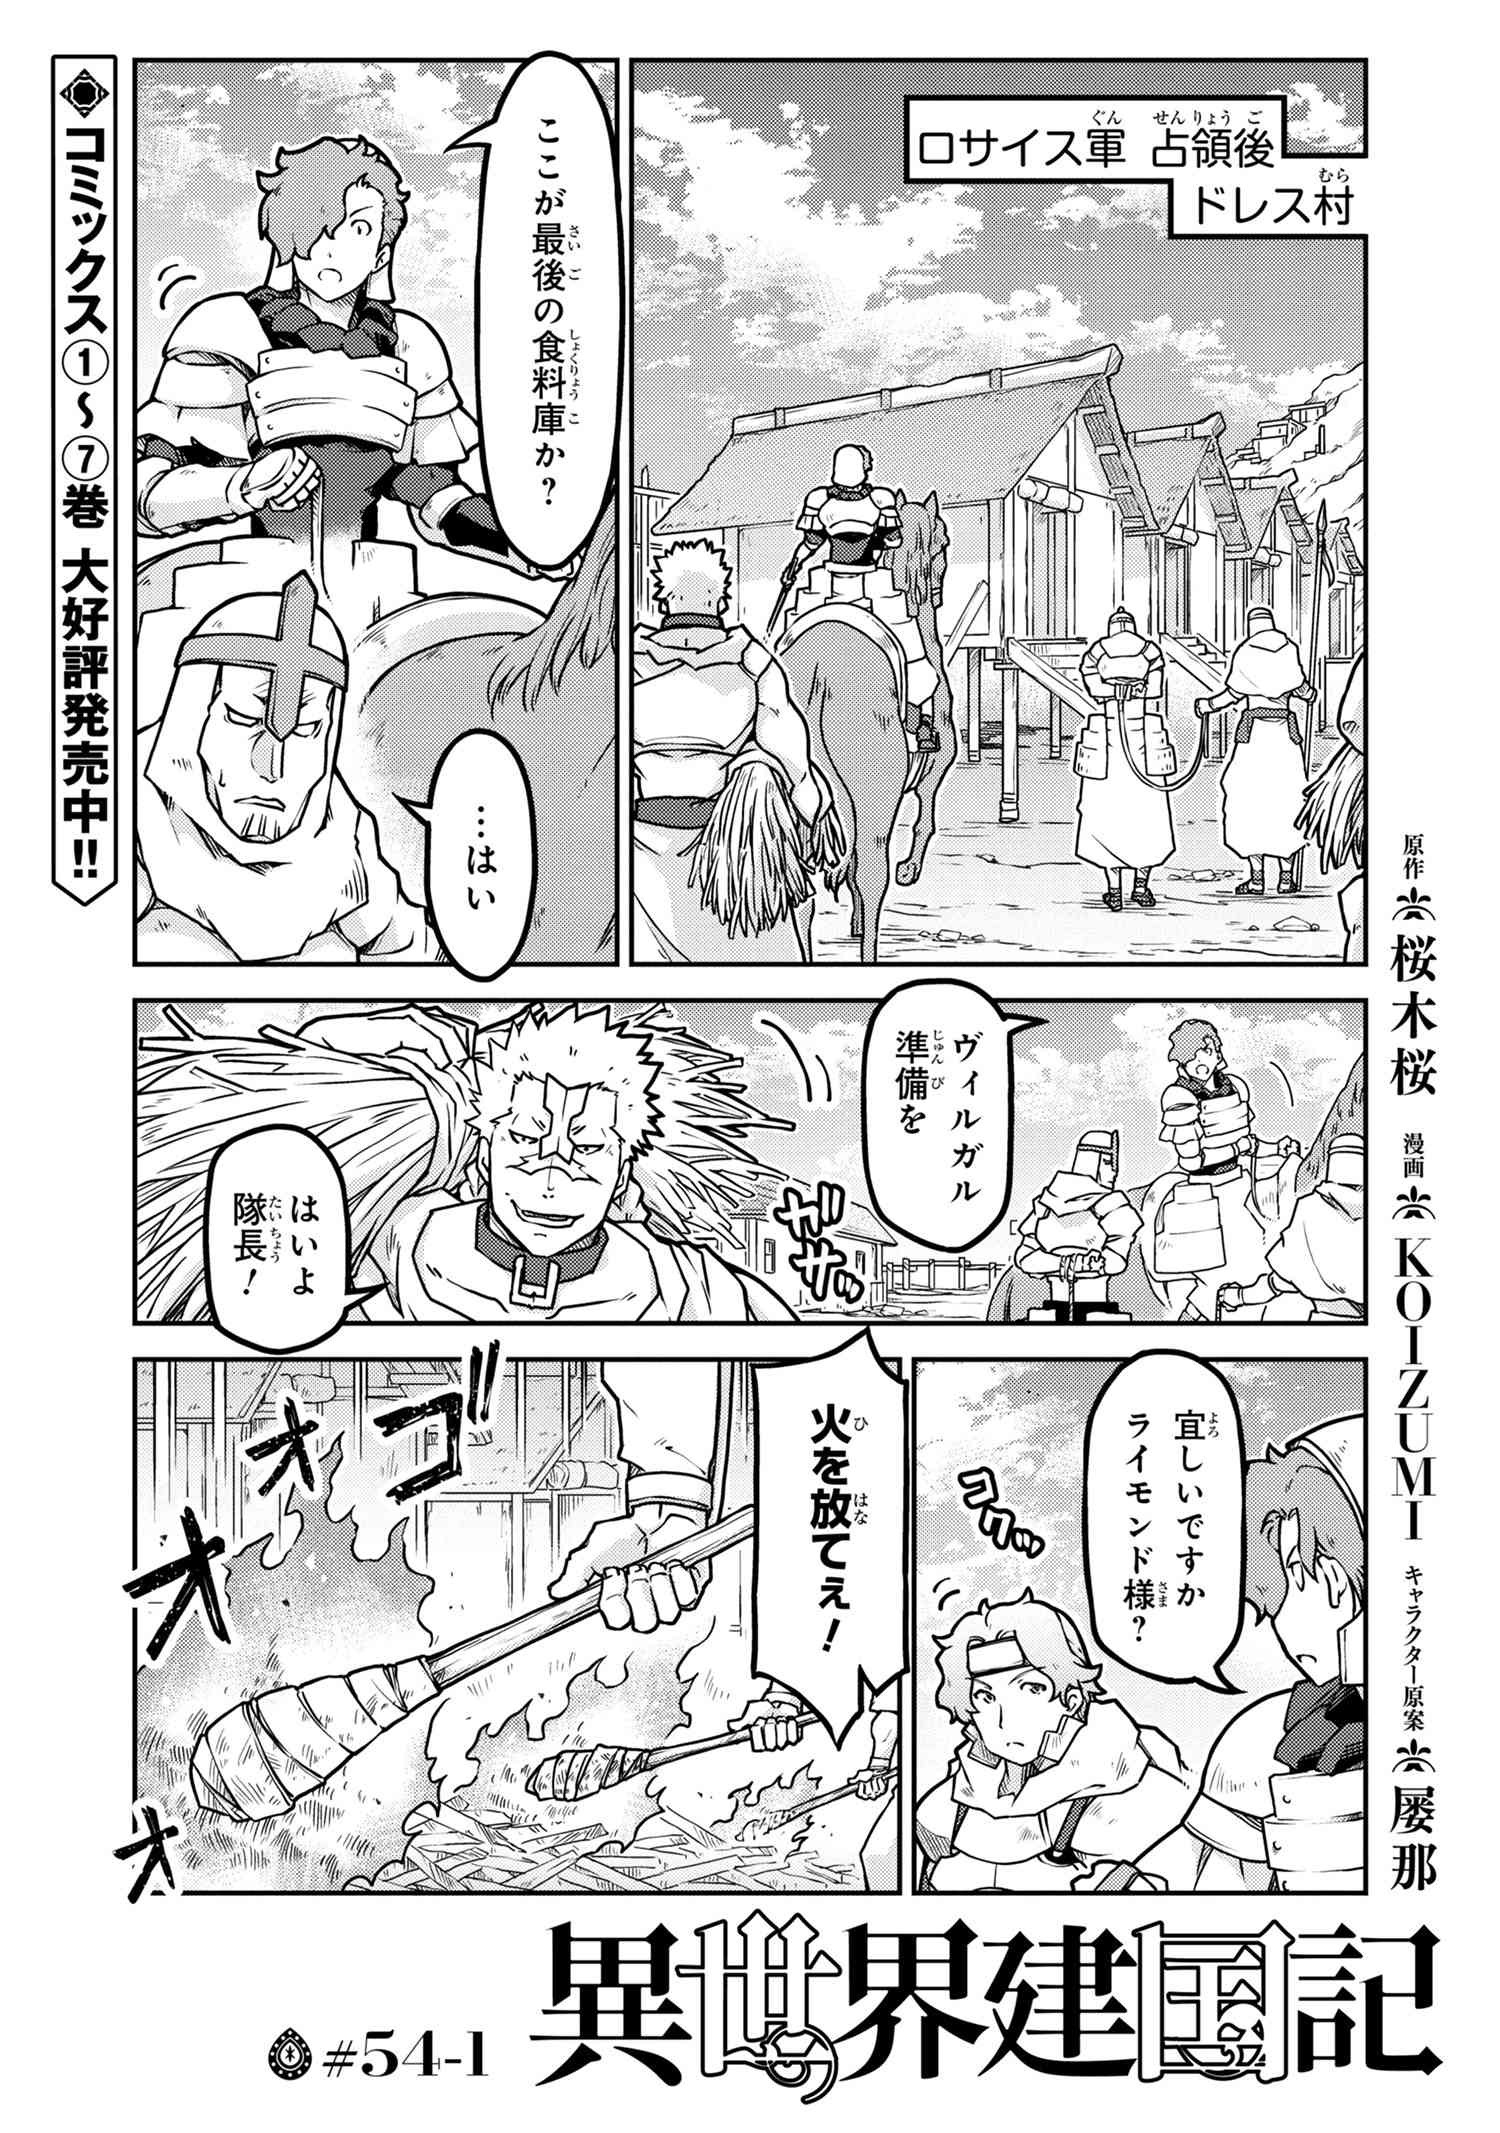 Isekai Kenkokuki - Chapter 54-1 - Page 1